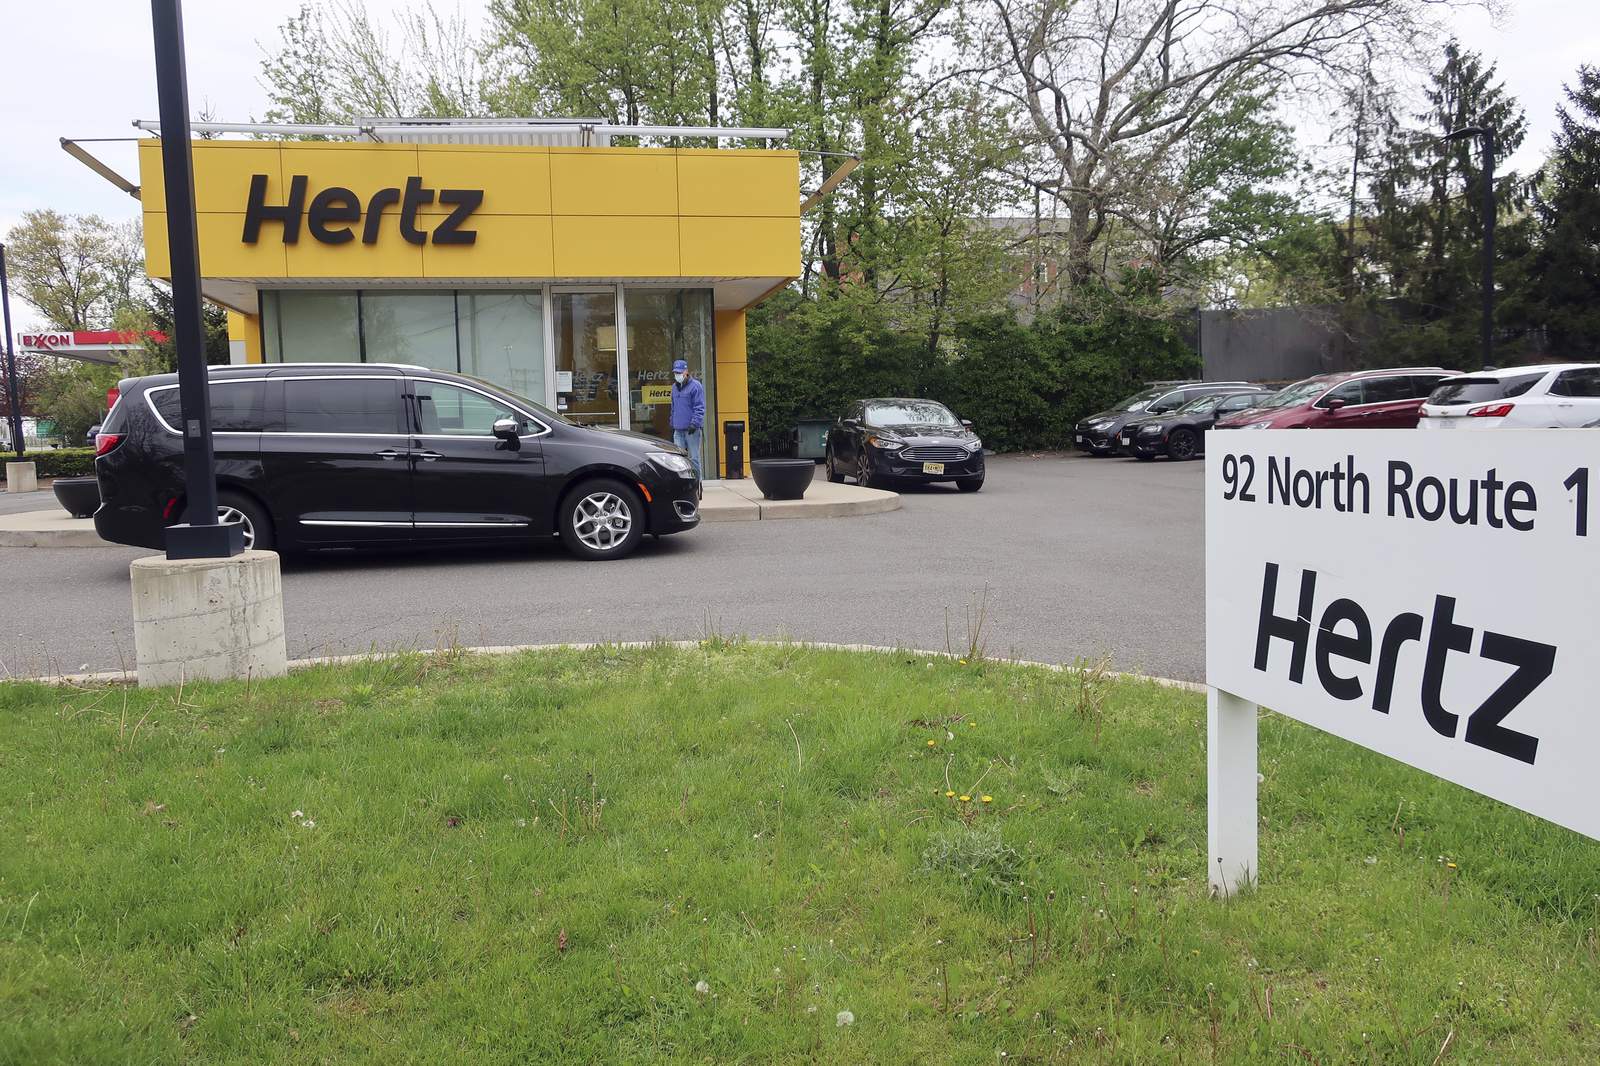 Michigan man sues Hertz over receipt that cleared him of murder